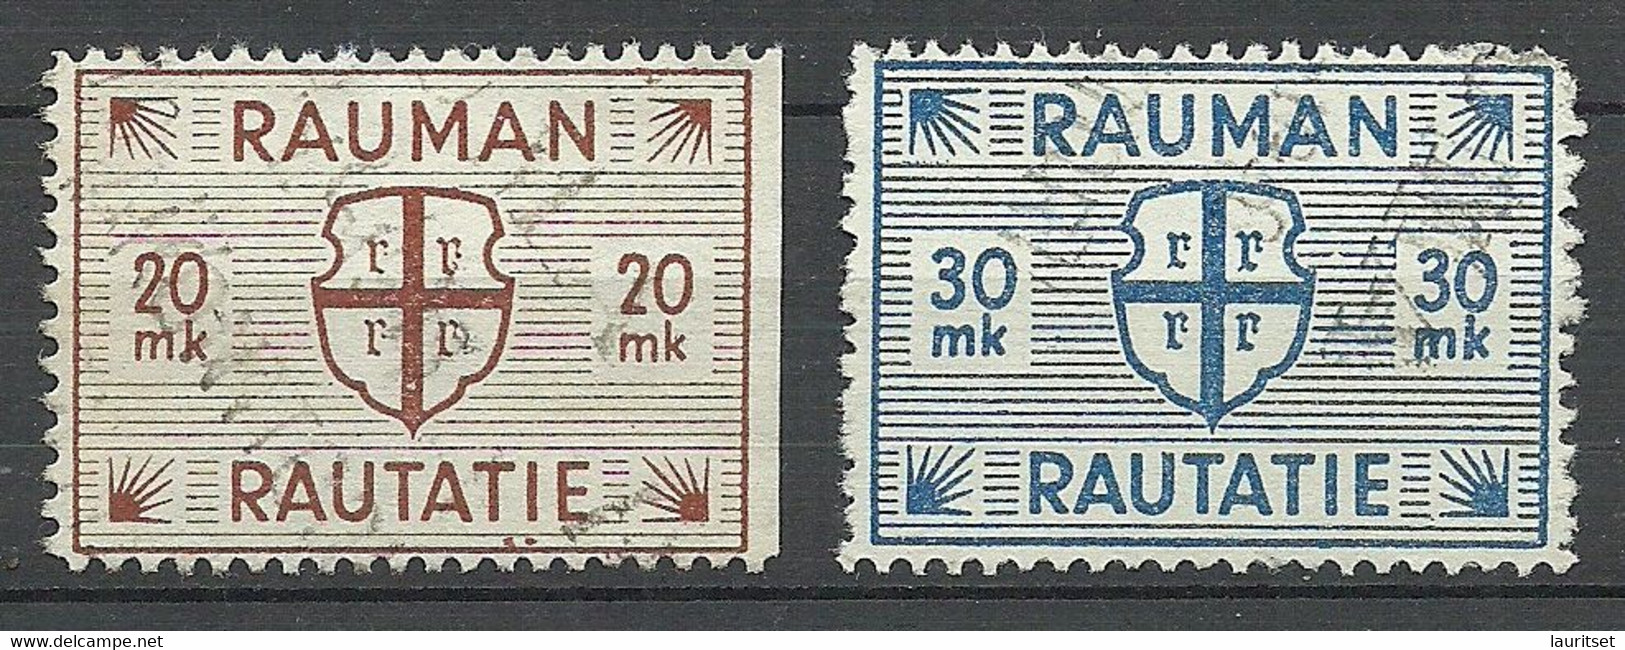 FINLAND FINNLAND 1945 RAUMA Railway Stamps 20 & 30 MK O - Colis Postaux